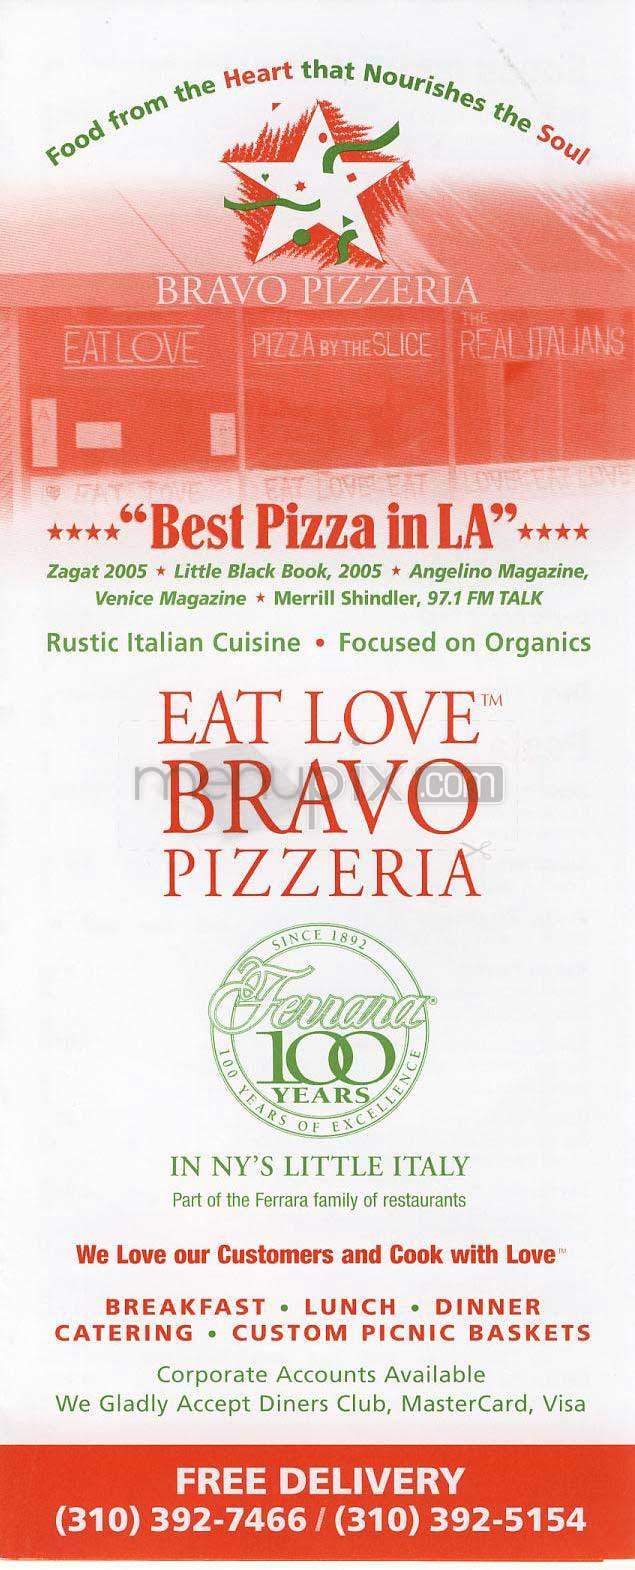 /201006/Bravo-Pizzeria-Santa-Monica-CA - Santa Monica, CA